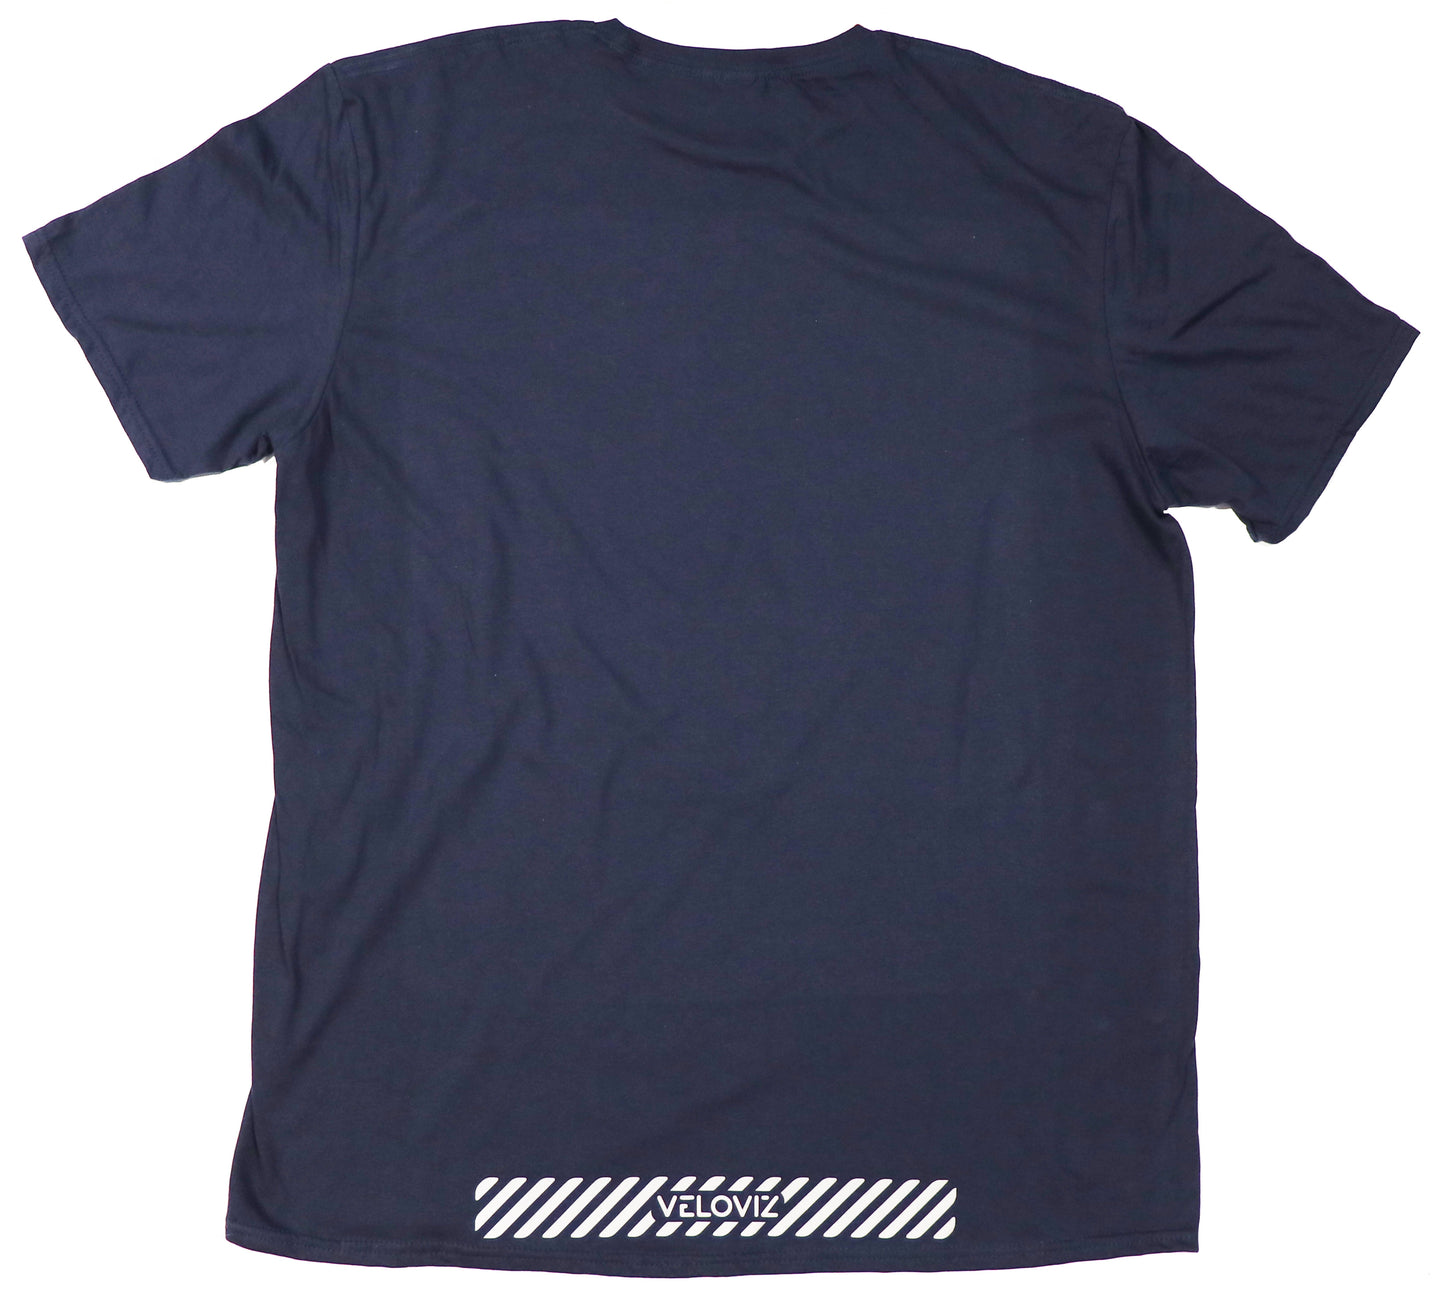 Reflective T Shirts - Infinite Visibility - Navy (Mens)